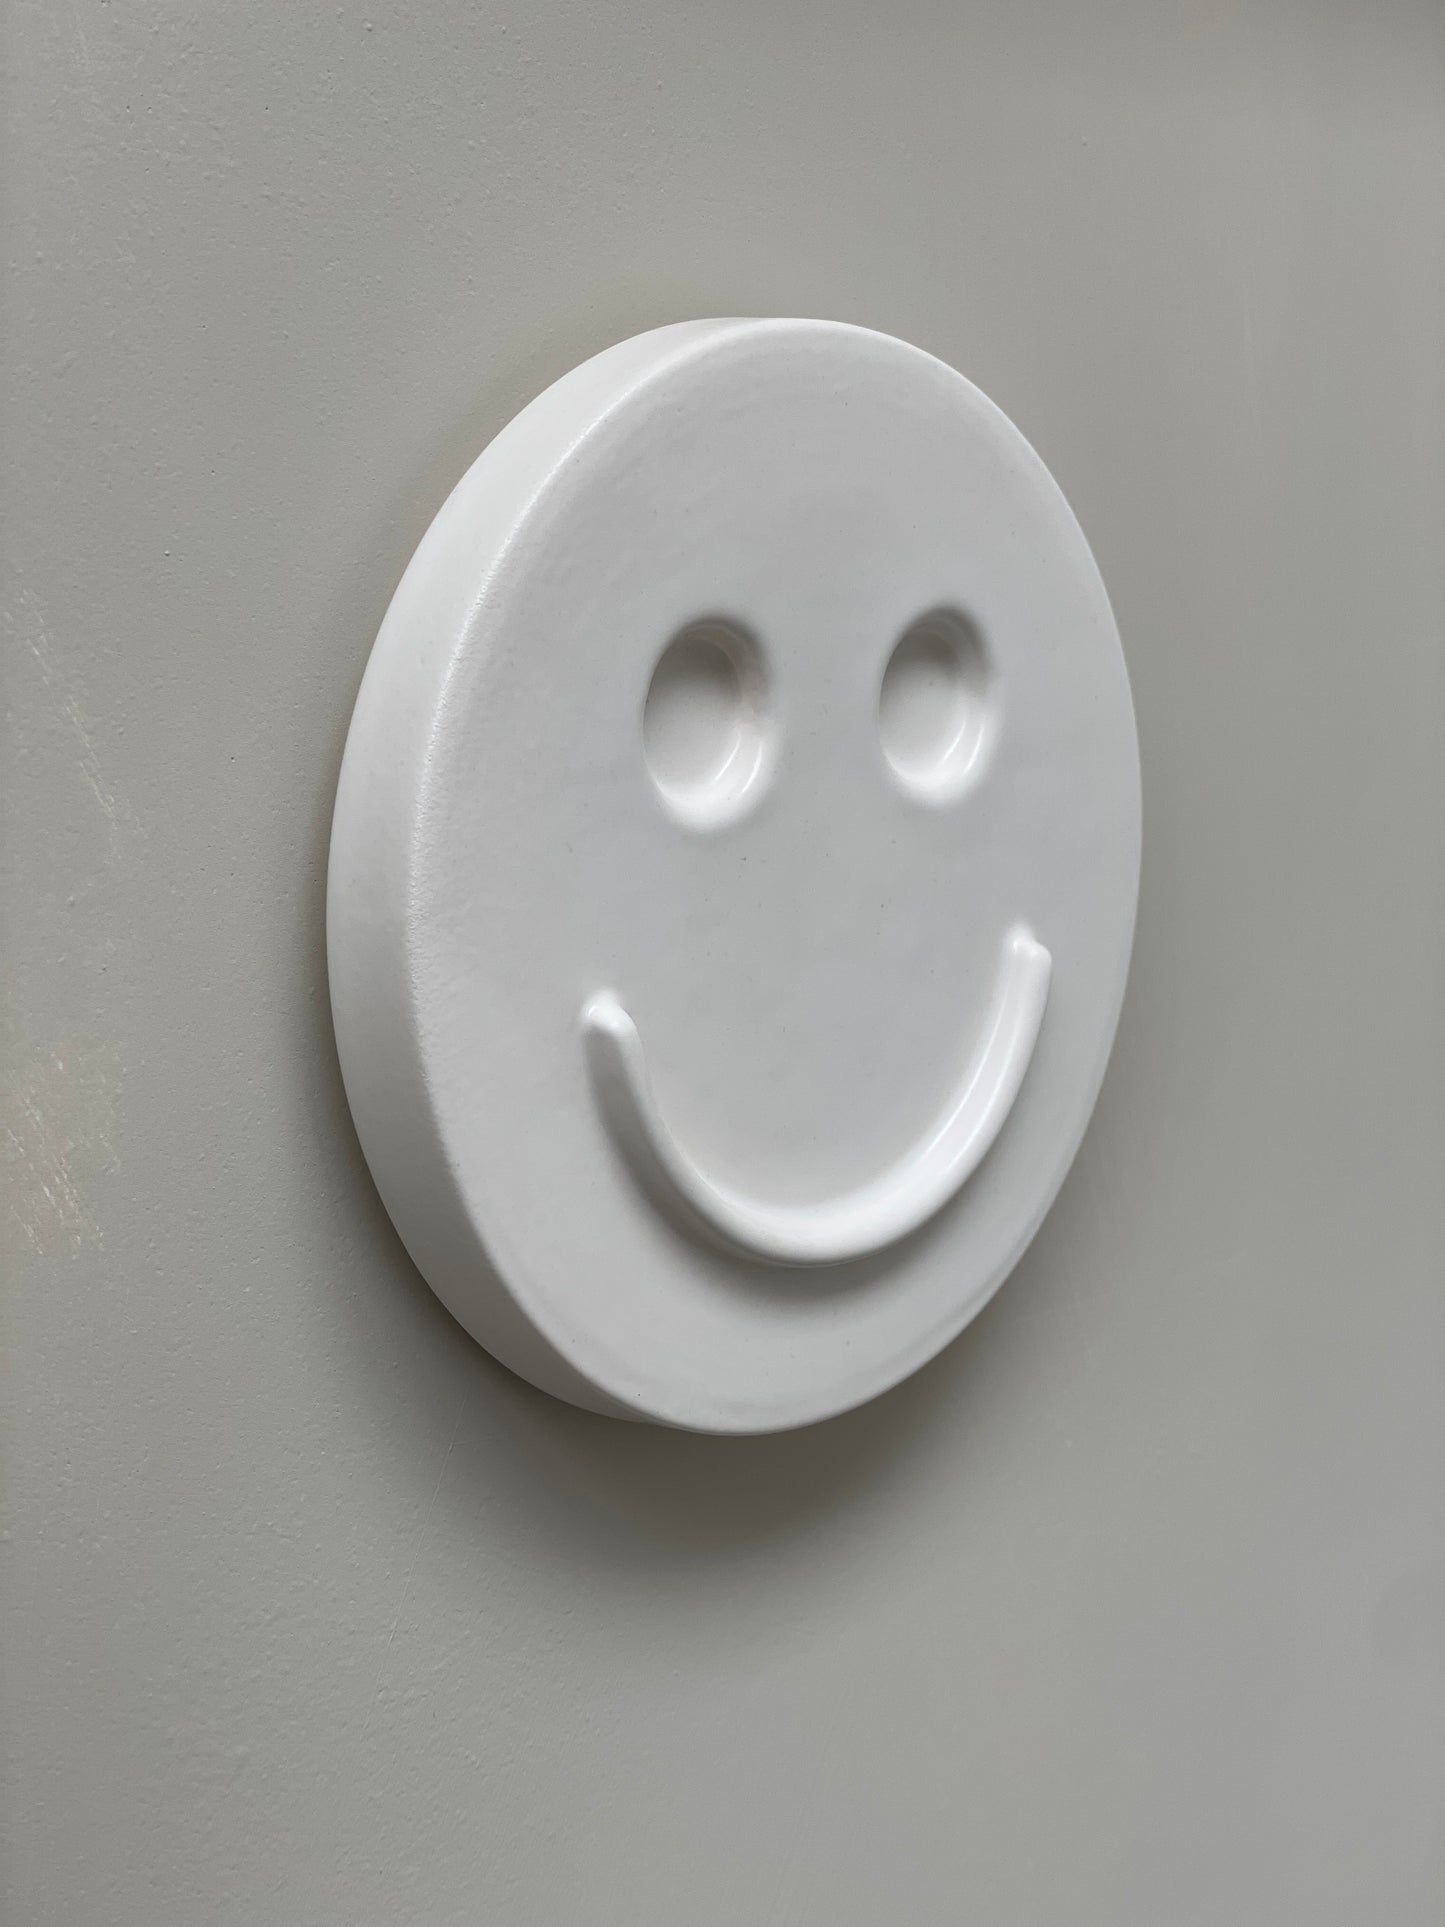 White 'HAPPY' ceramic artwork